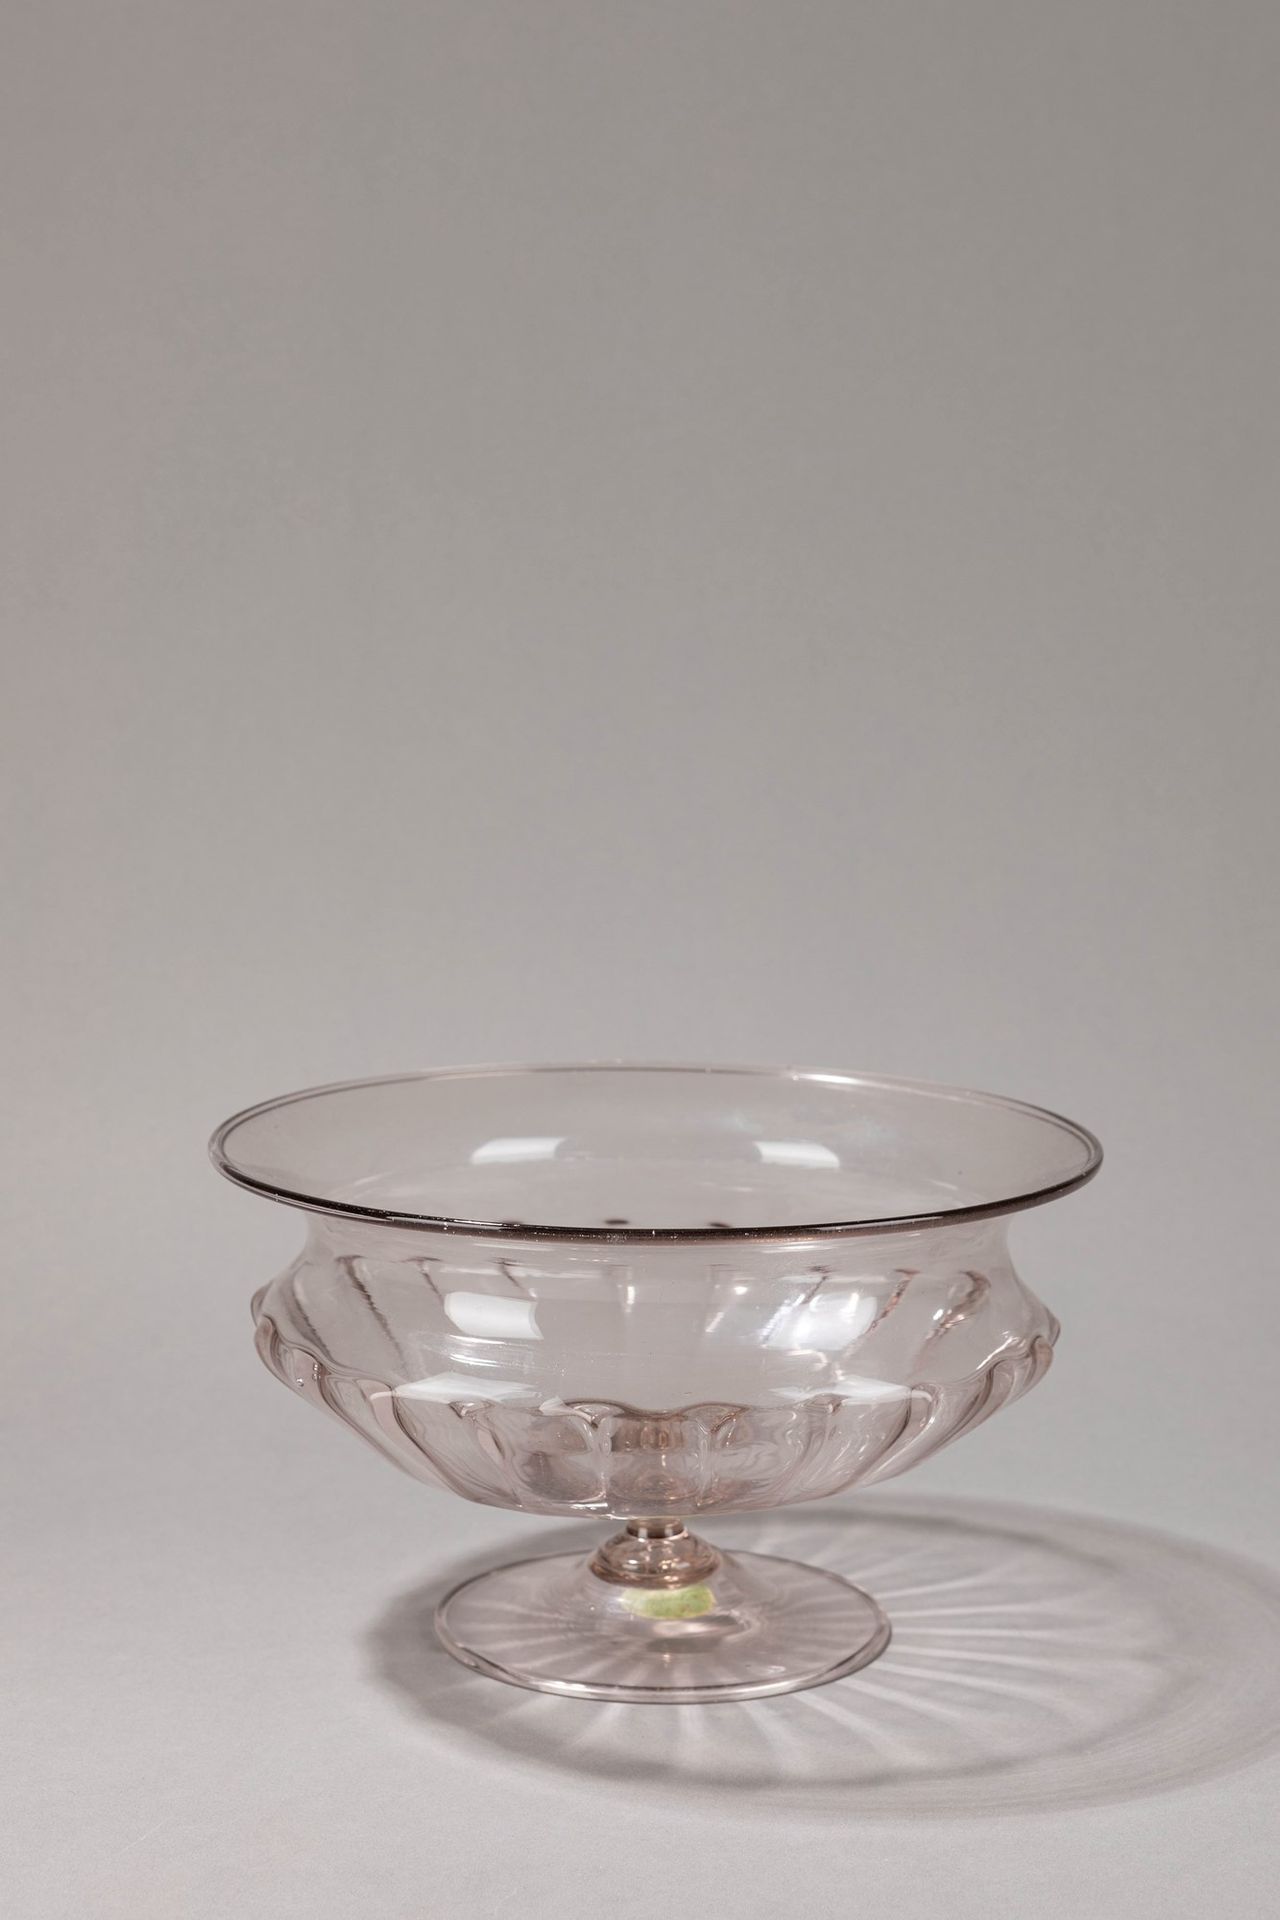 VITTORIO ZECCHIN 花瓶，1920年左右

高13.5厘米，直径23.5厘米
吹制玻璃。原始标签。

MVM Cappellin制造厂